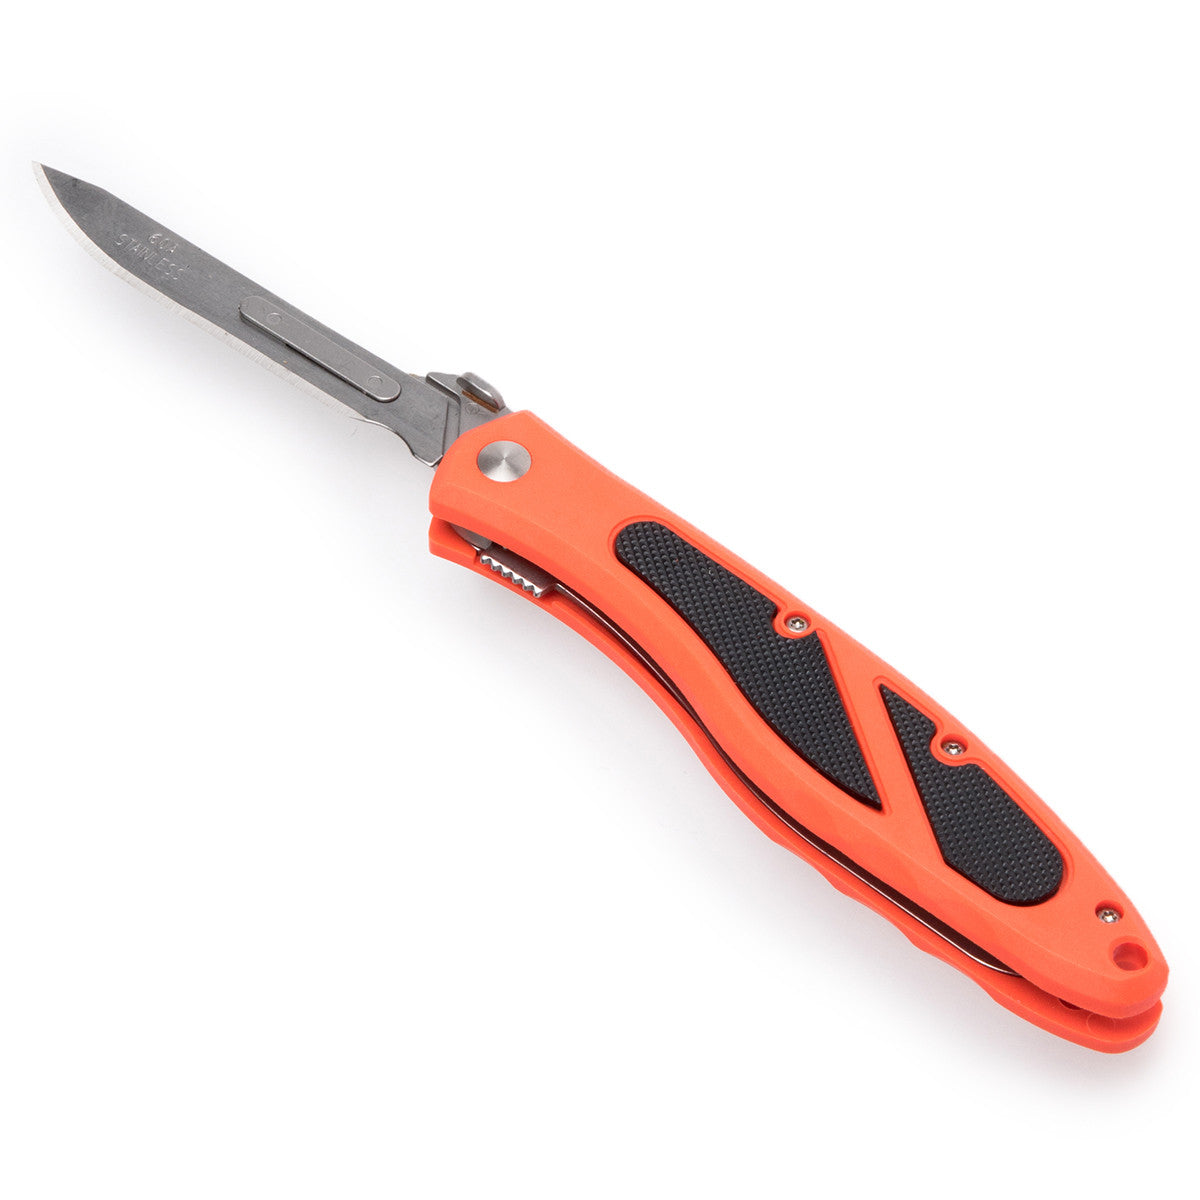 Havalon Piranta EDGE Replaceable Blade Knife in Havalon Piranta EDGE Replaceable Blade Knife - goHUNT Shop by GOHUNT | Havalon Knives - GOHUNT Shop